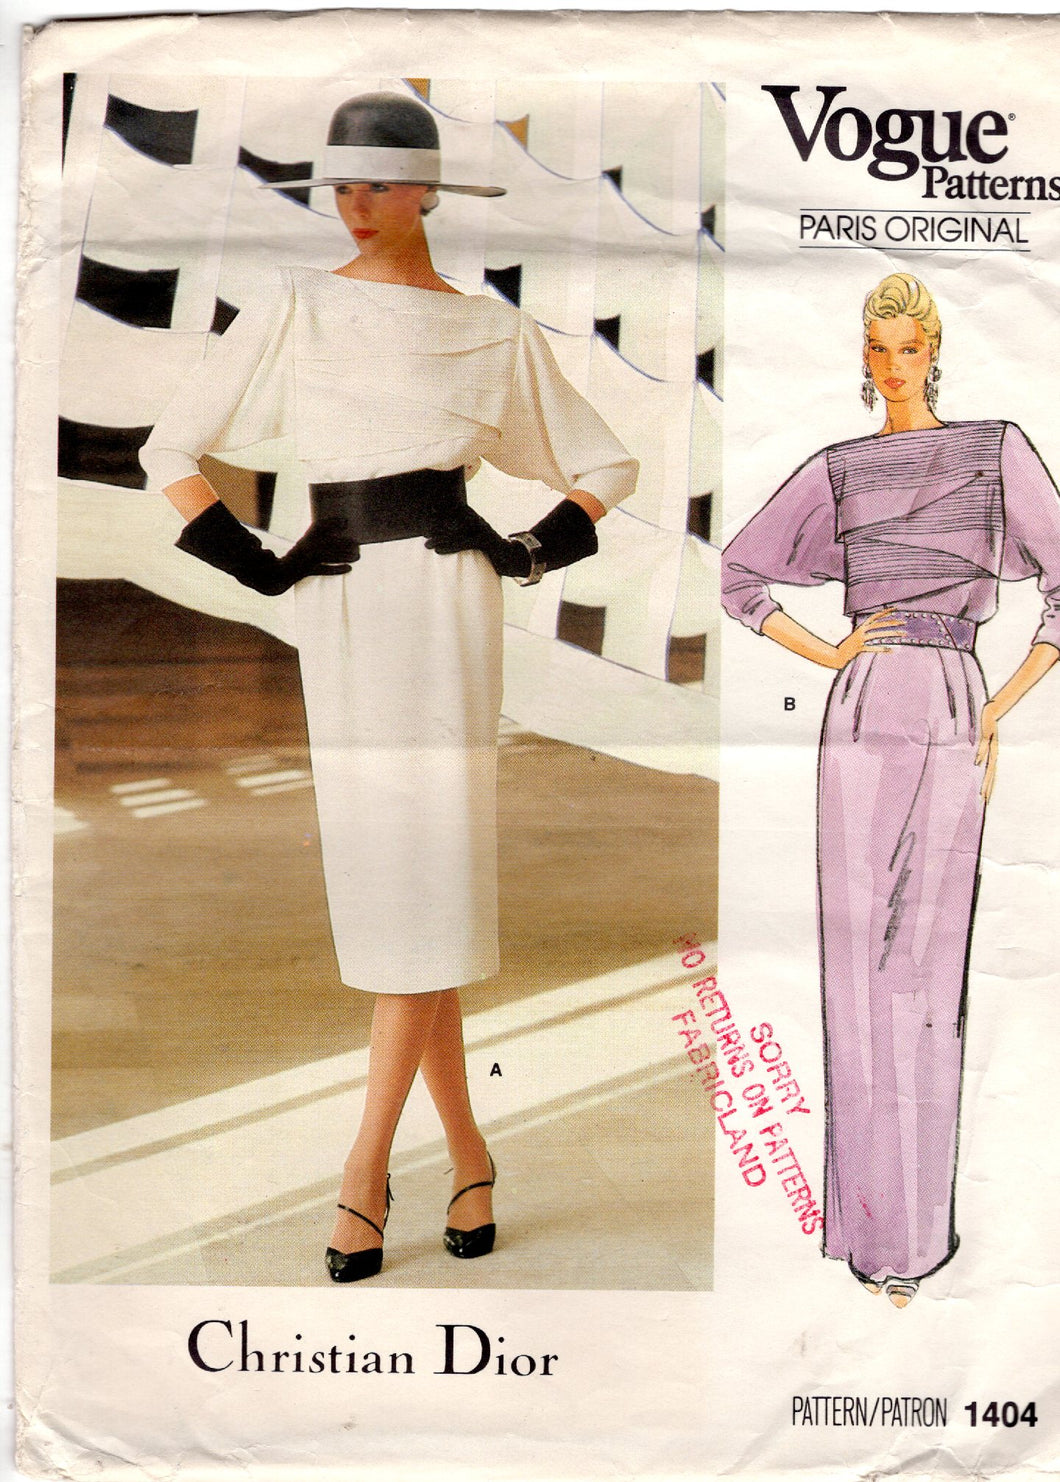 1980's Vogue Paris Original Midi or Maxi Draped Front Dress Pattern - Christian DIOR - Bust 31.5 - No. 1404